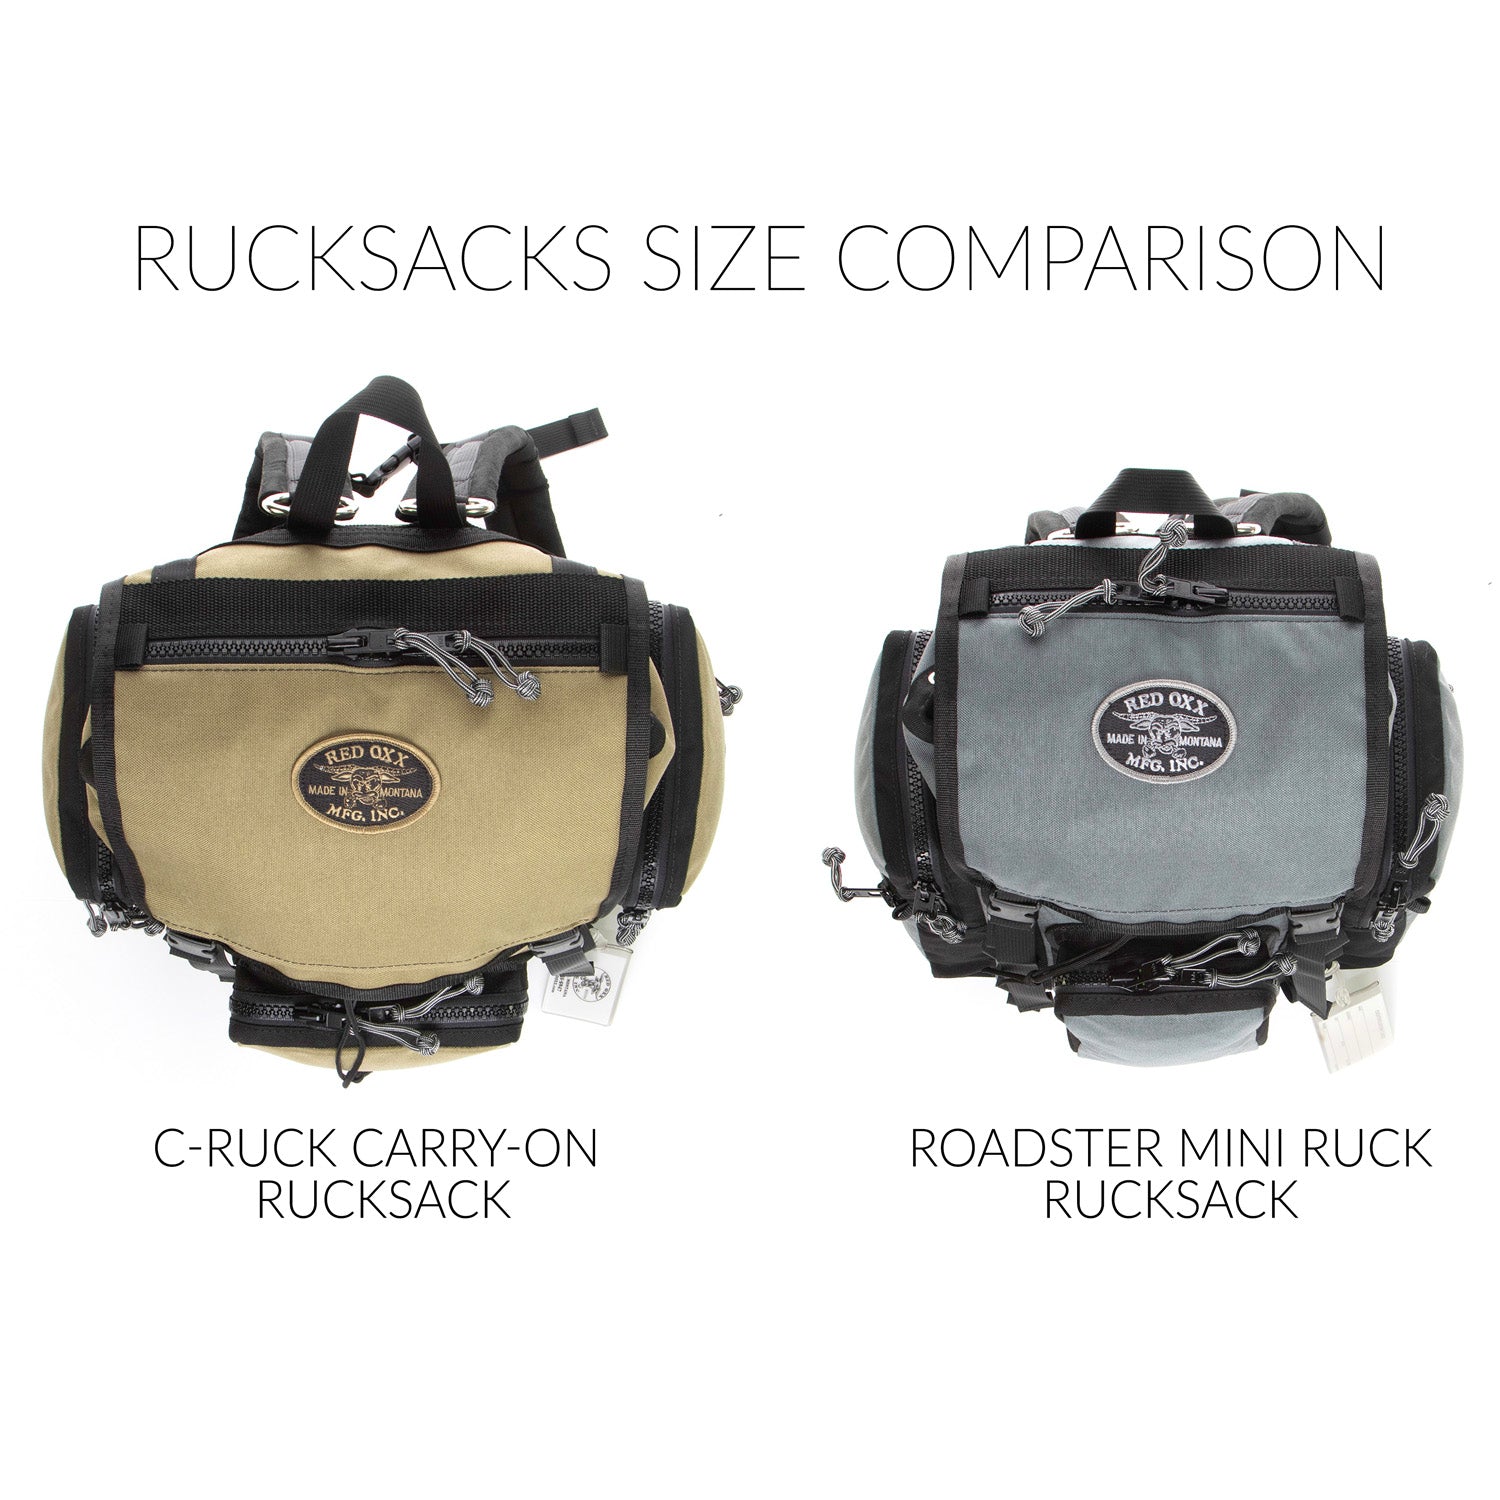 Rucksacks comparison C-Ruck Carryon Rucksack (left) and Roadster mini ruck rucksack. 